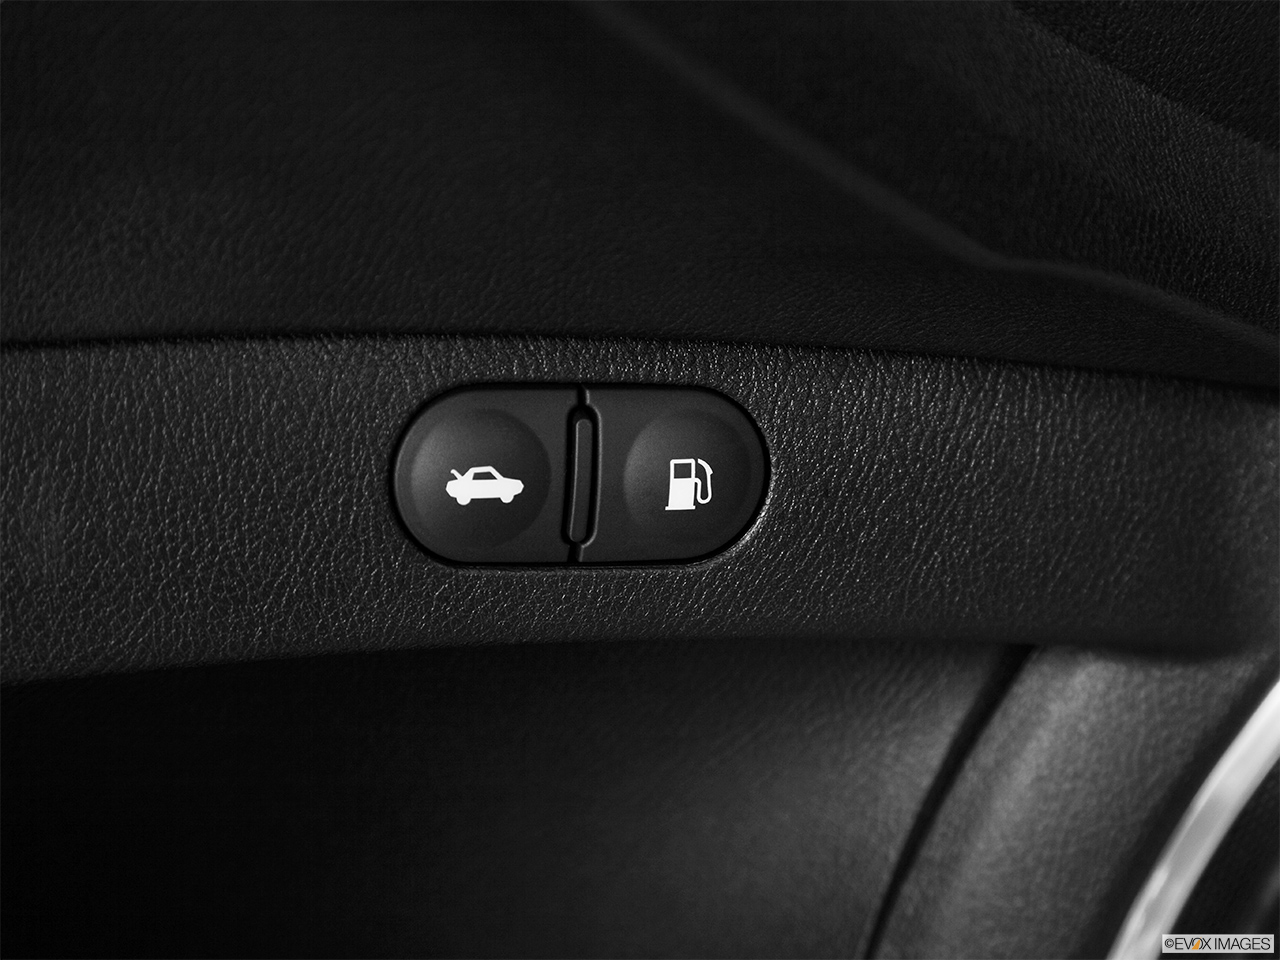 2013 Acura TL SH-AWD Gas cap release. 